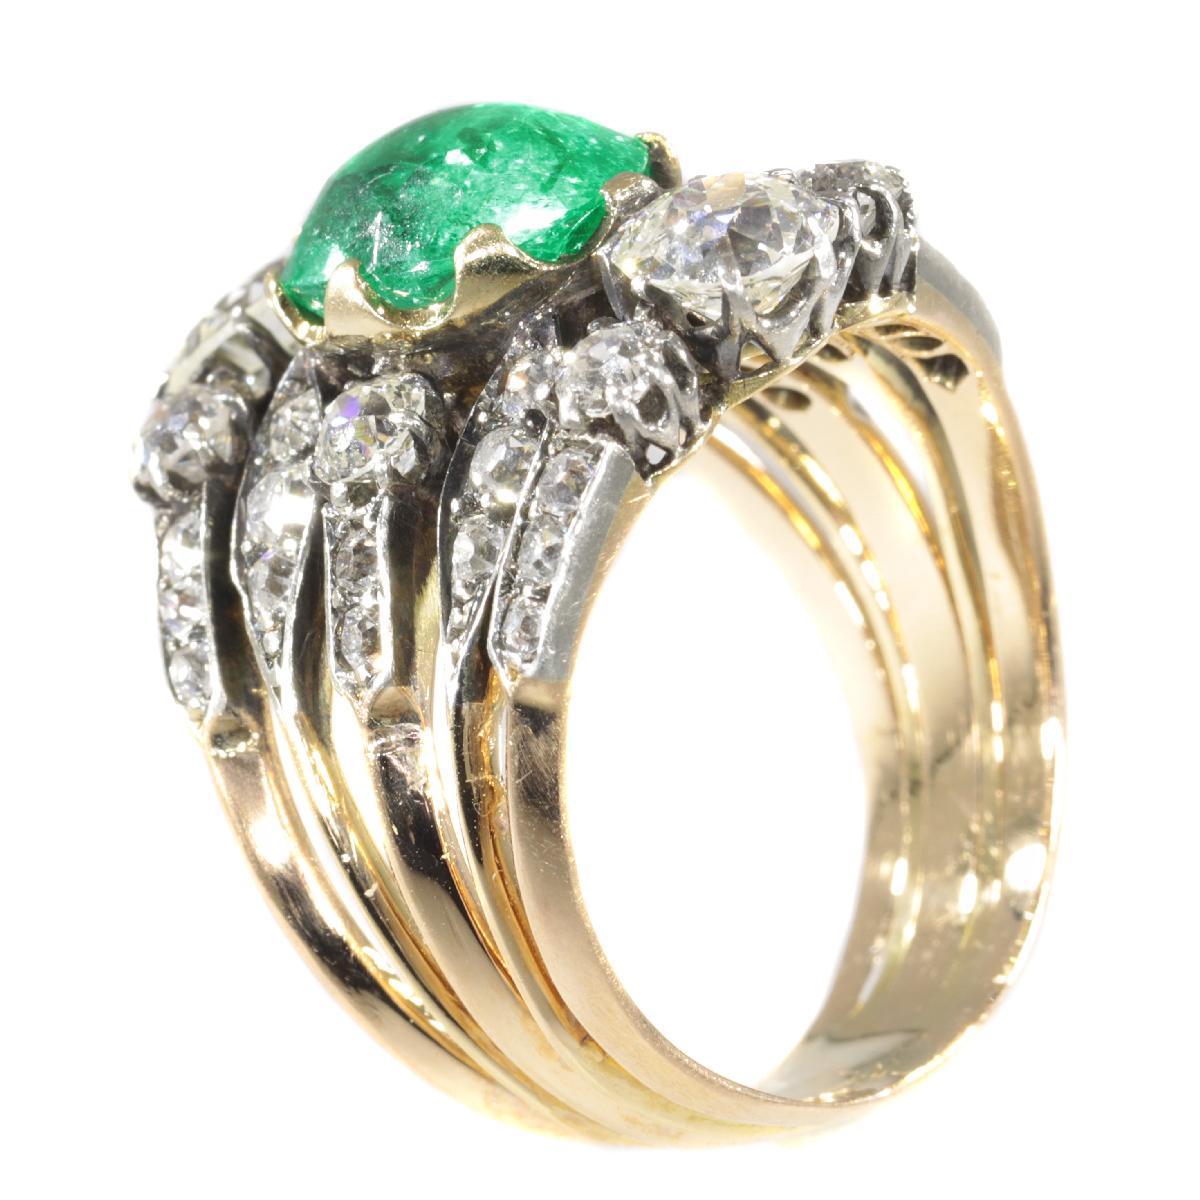 True Eyecatcher Victorian Antique Ring with a 3.50 Carat Ovalcut Emerald 4